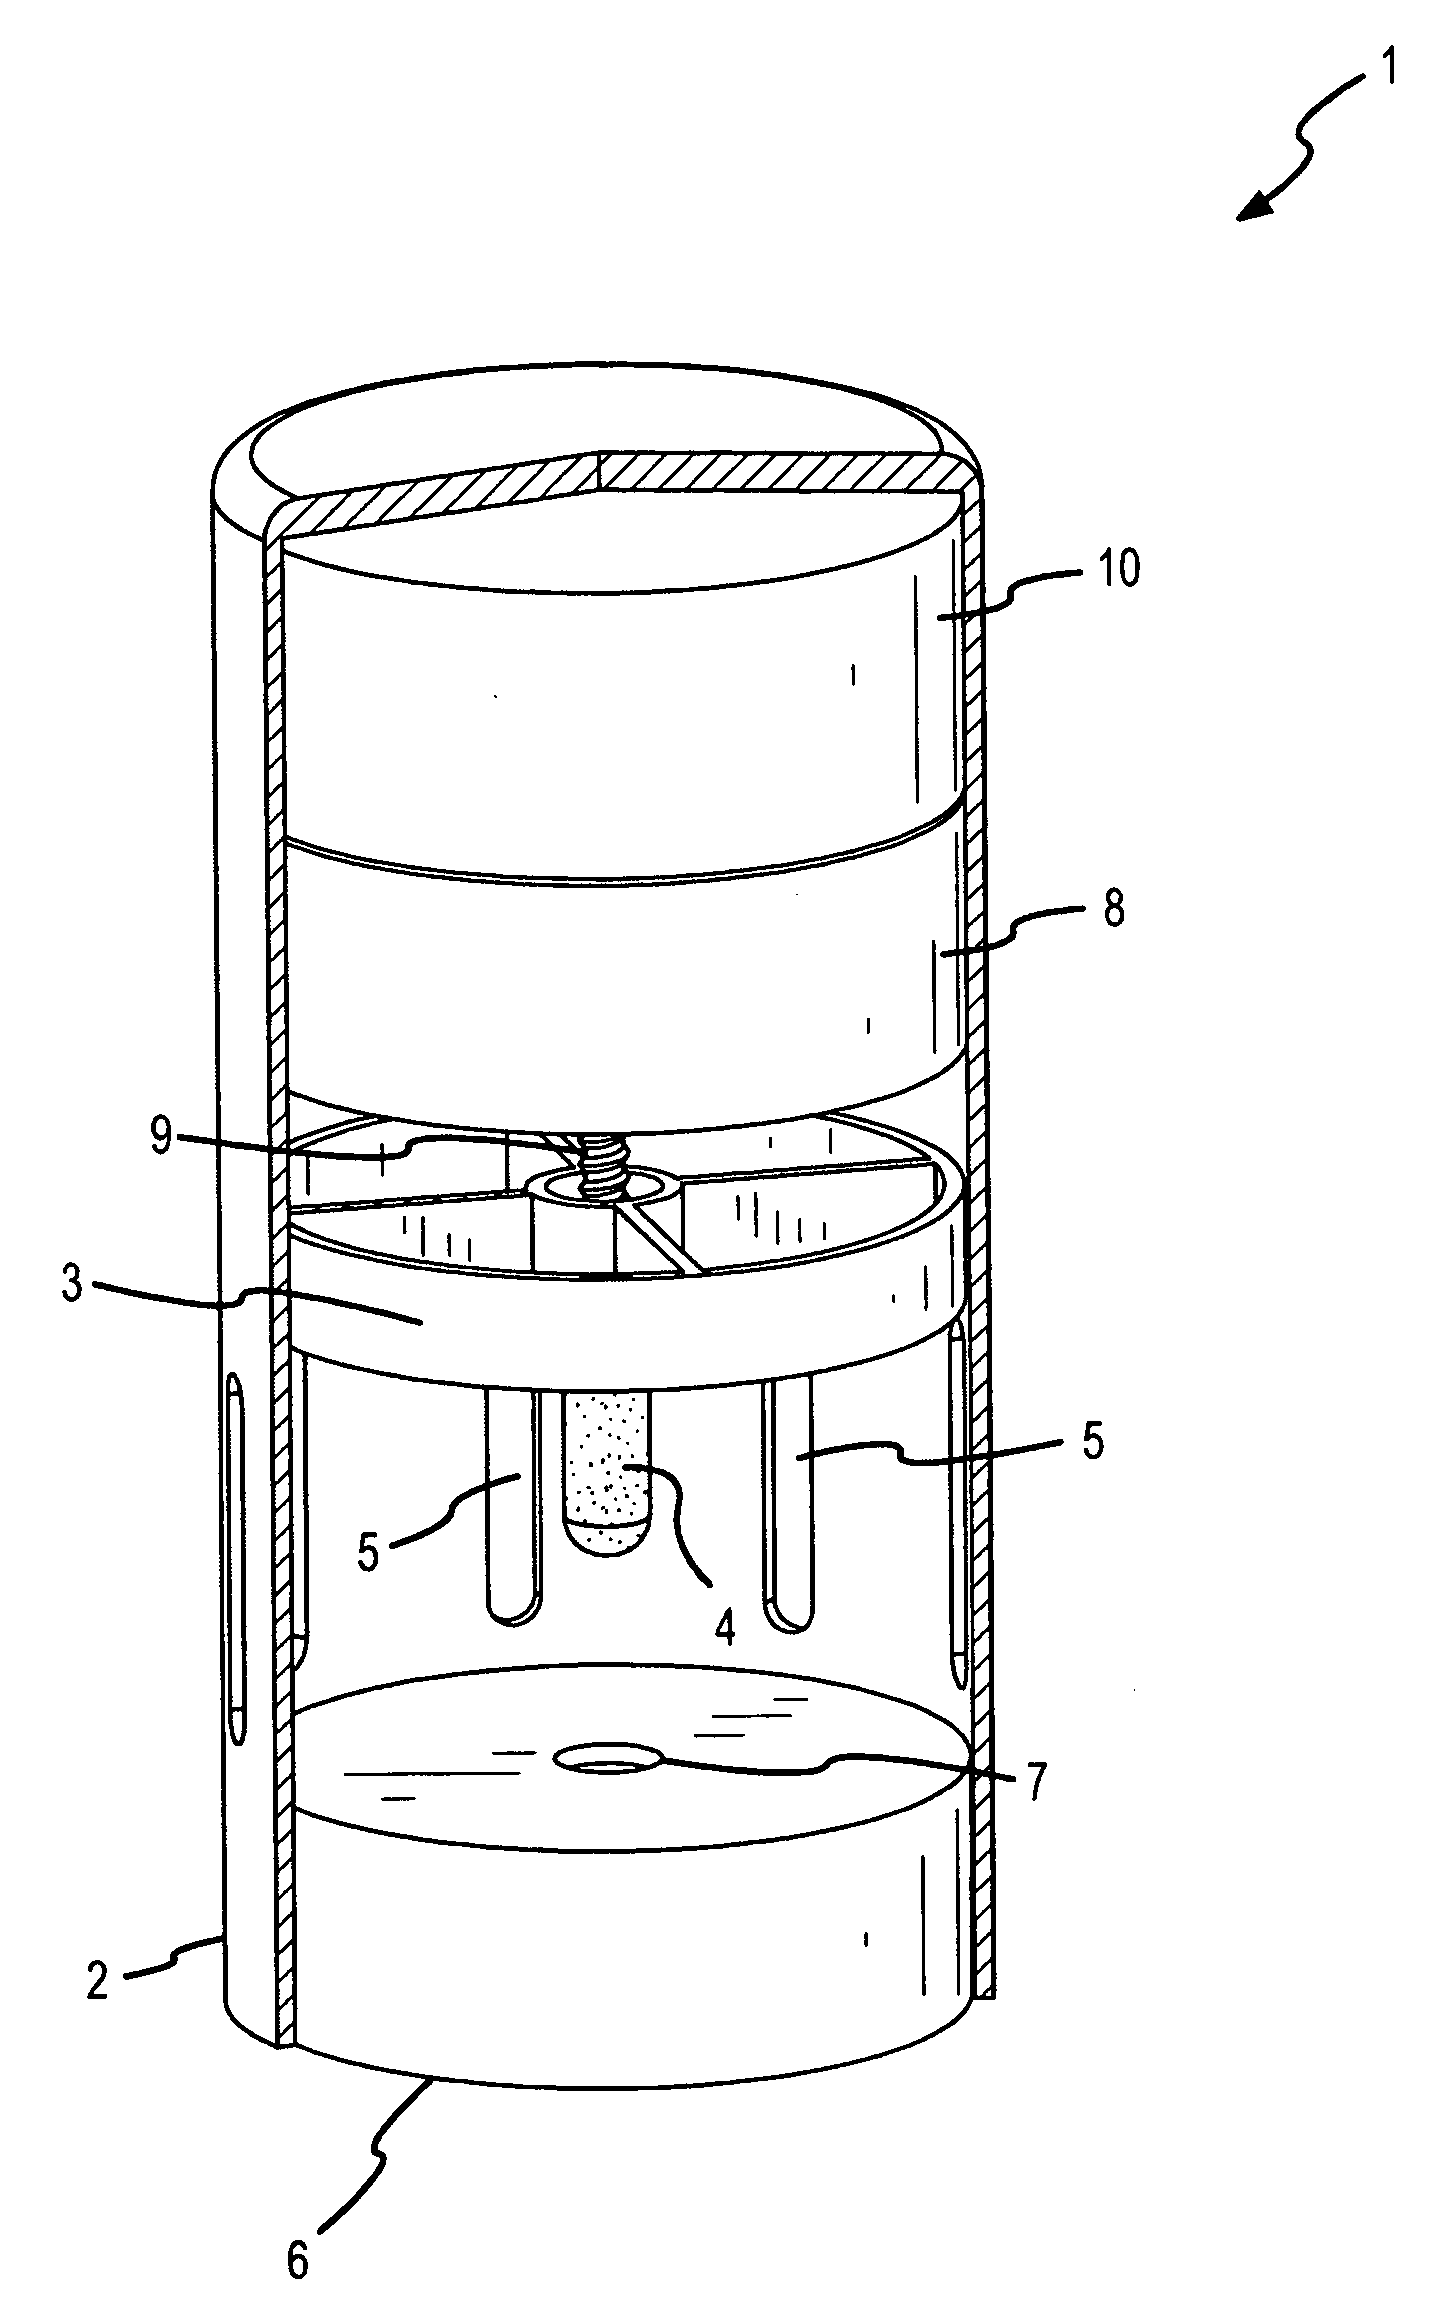 Piston actuated vapor-dispersing device